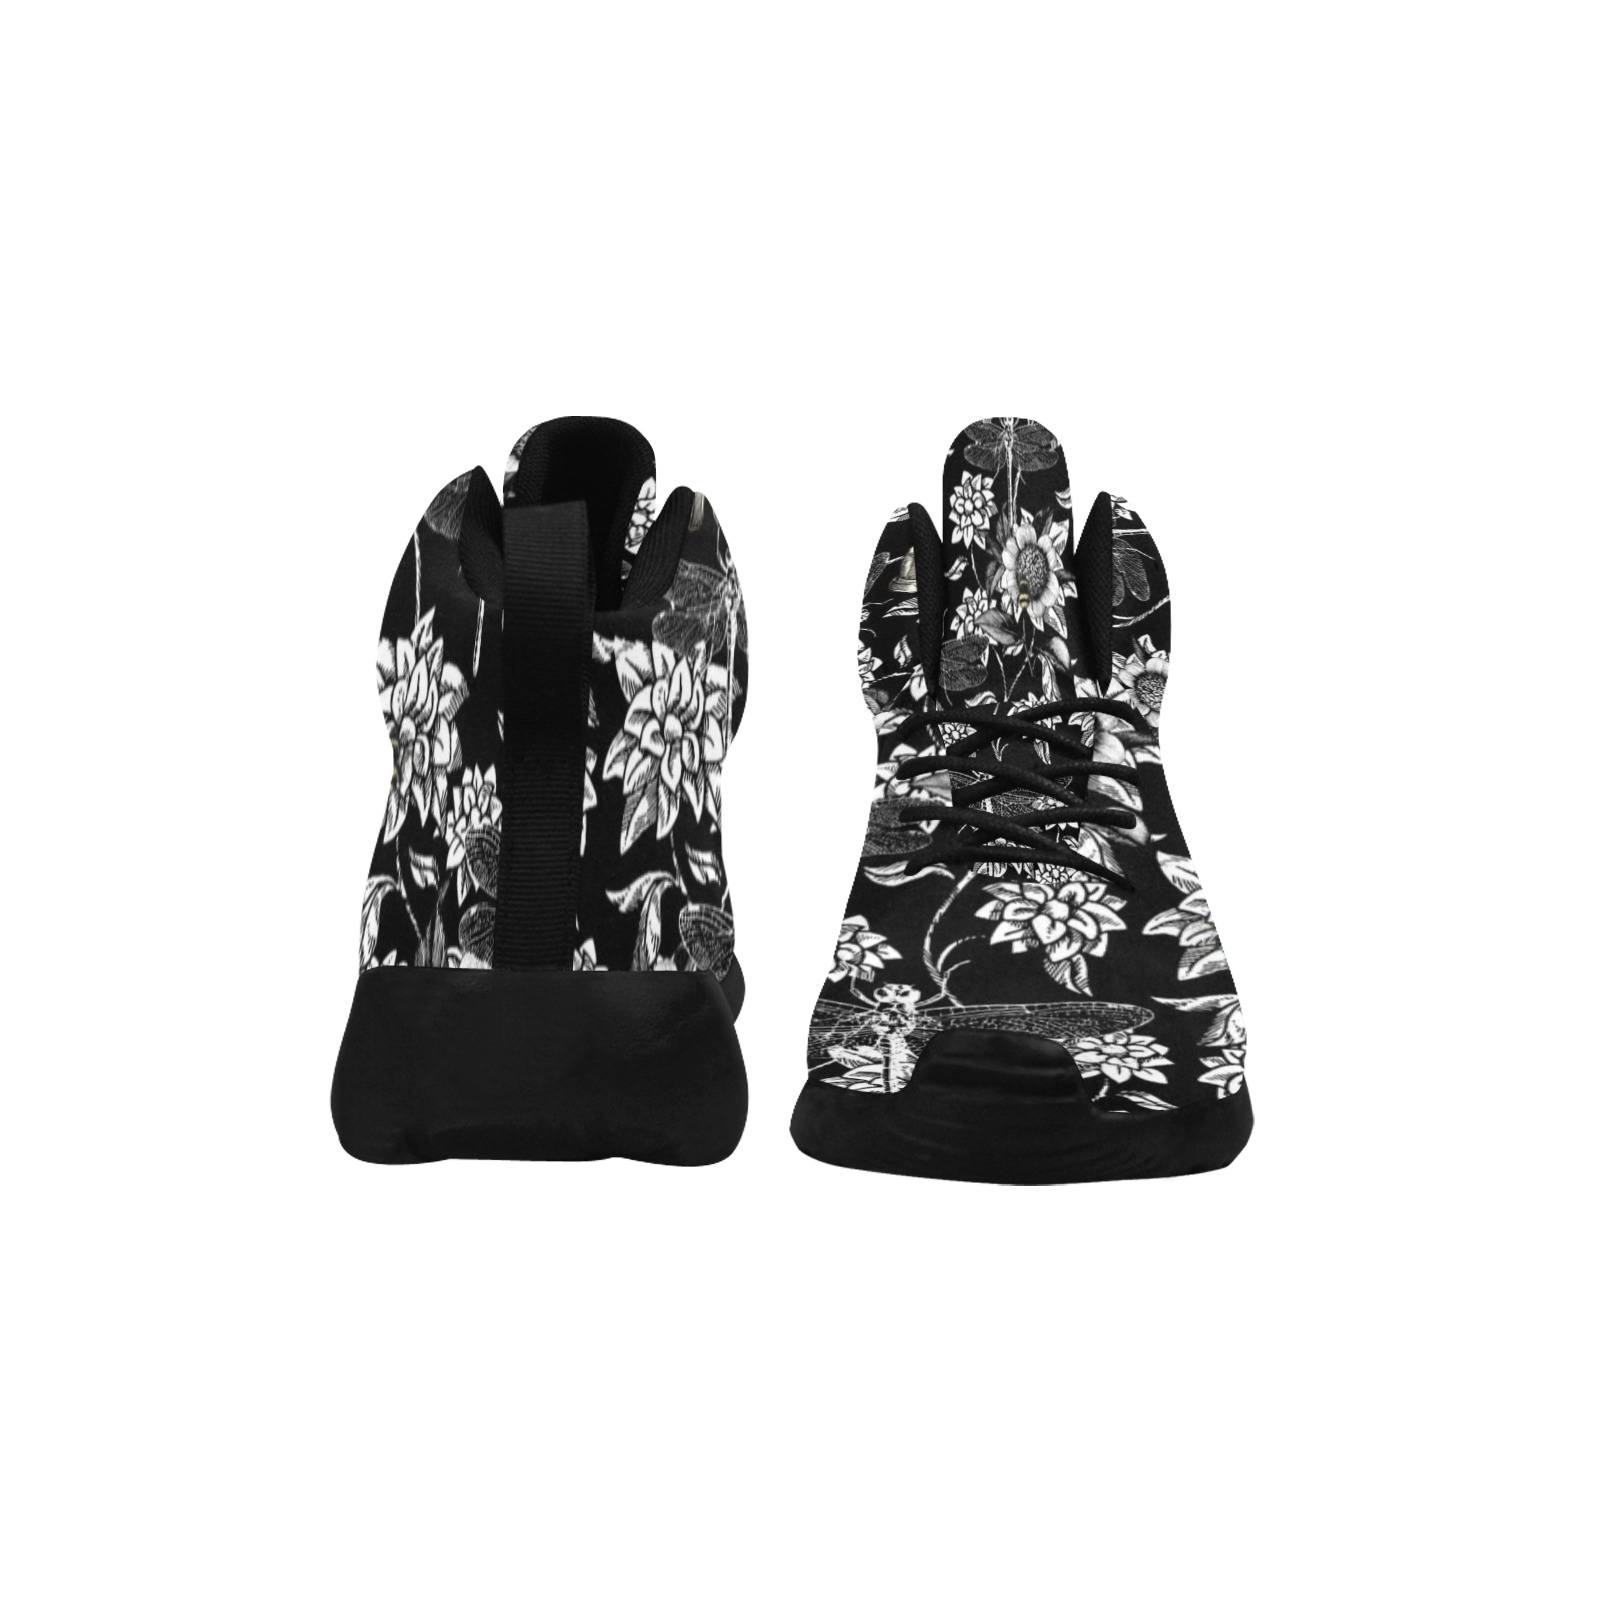 Black and White Nature Garden Women's Chukka Training Shoes (Model 57502)